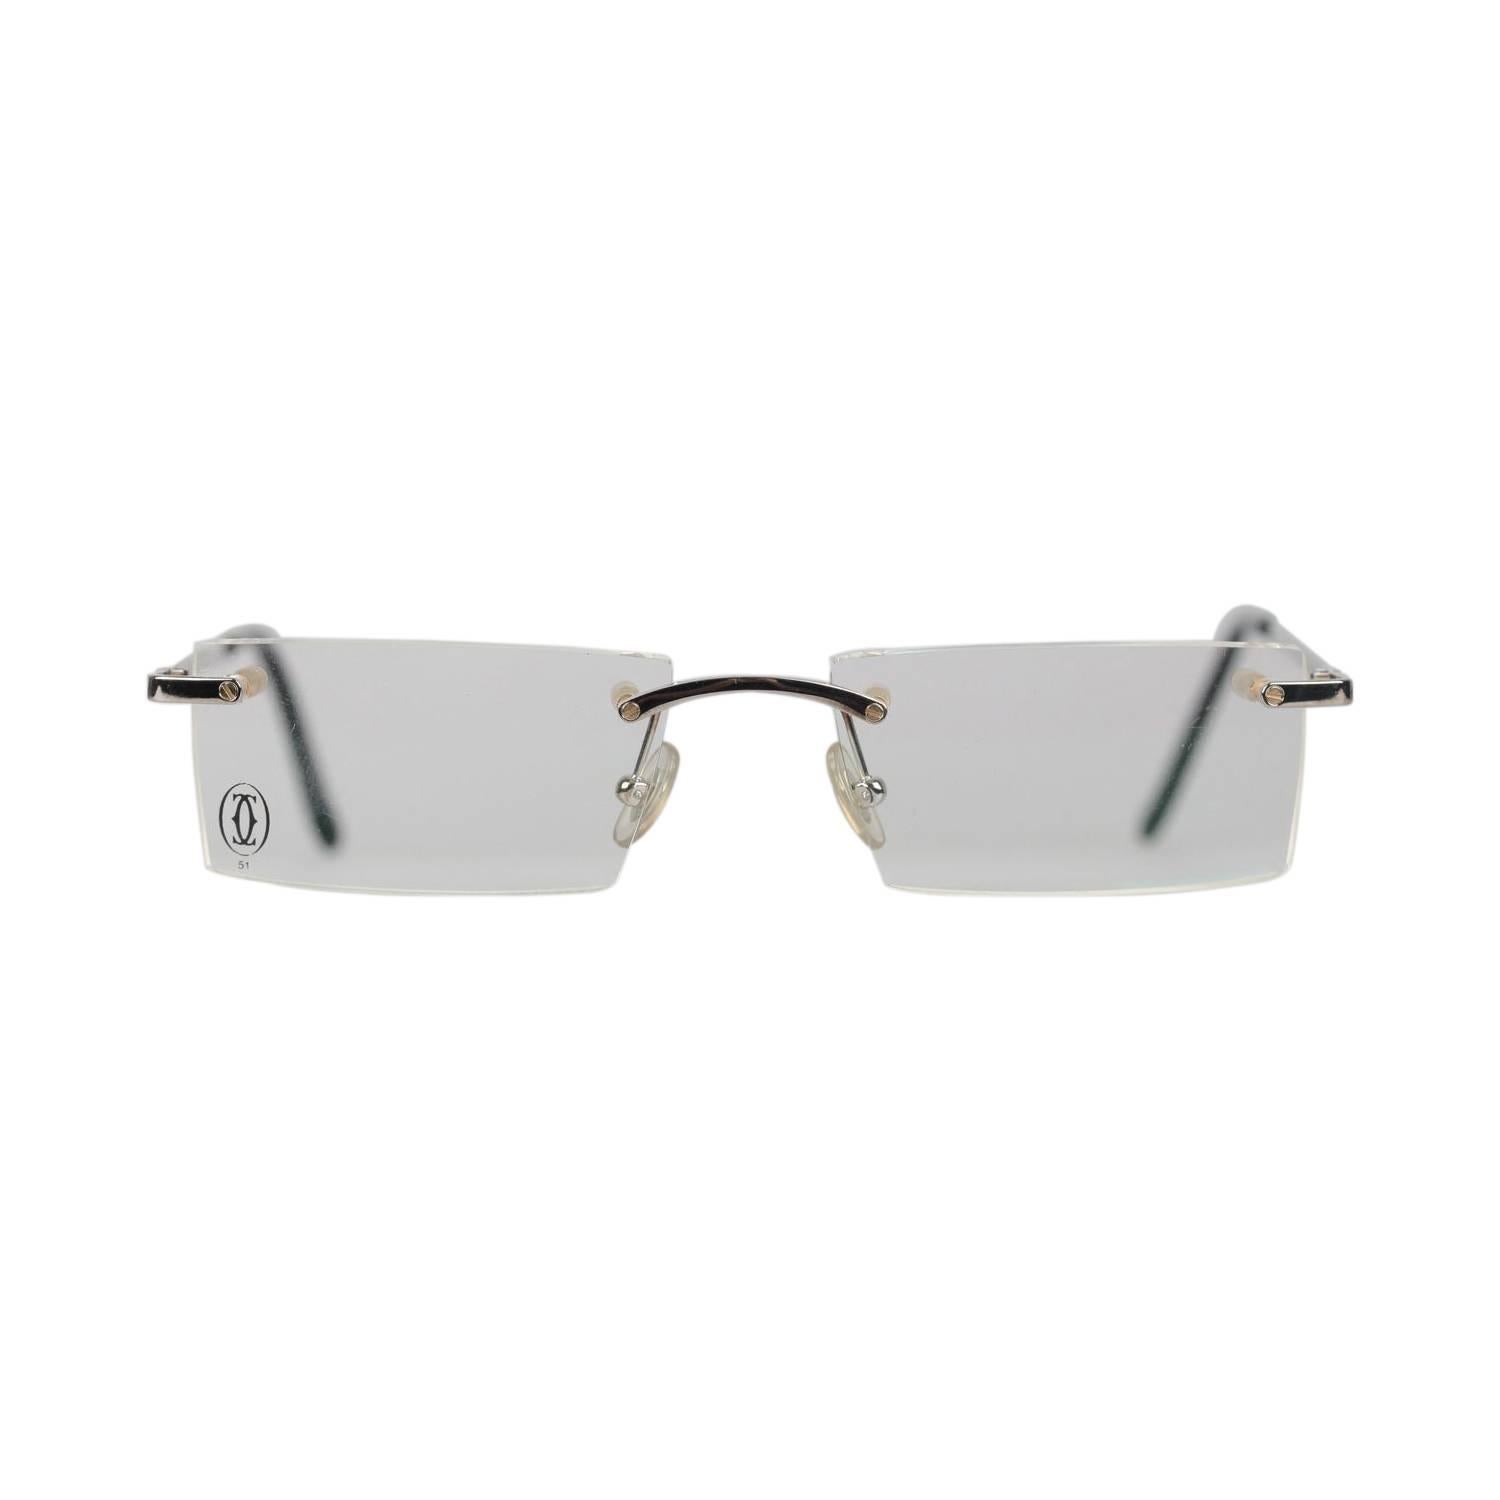 Cartier Paris Rimless Eyeglasses T-Eye T8100716 Titanium 51-17 140mm NOS